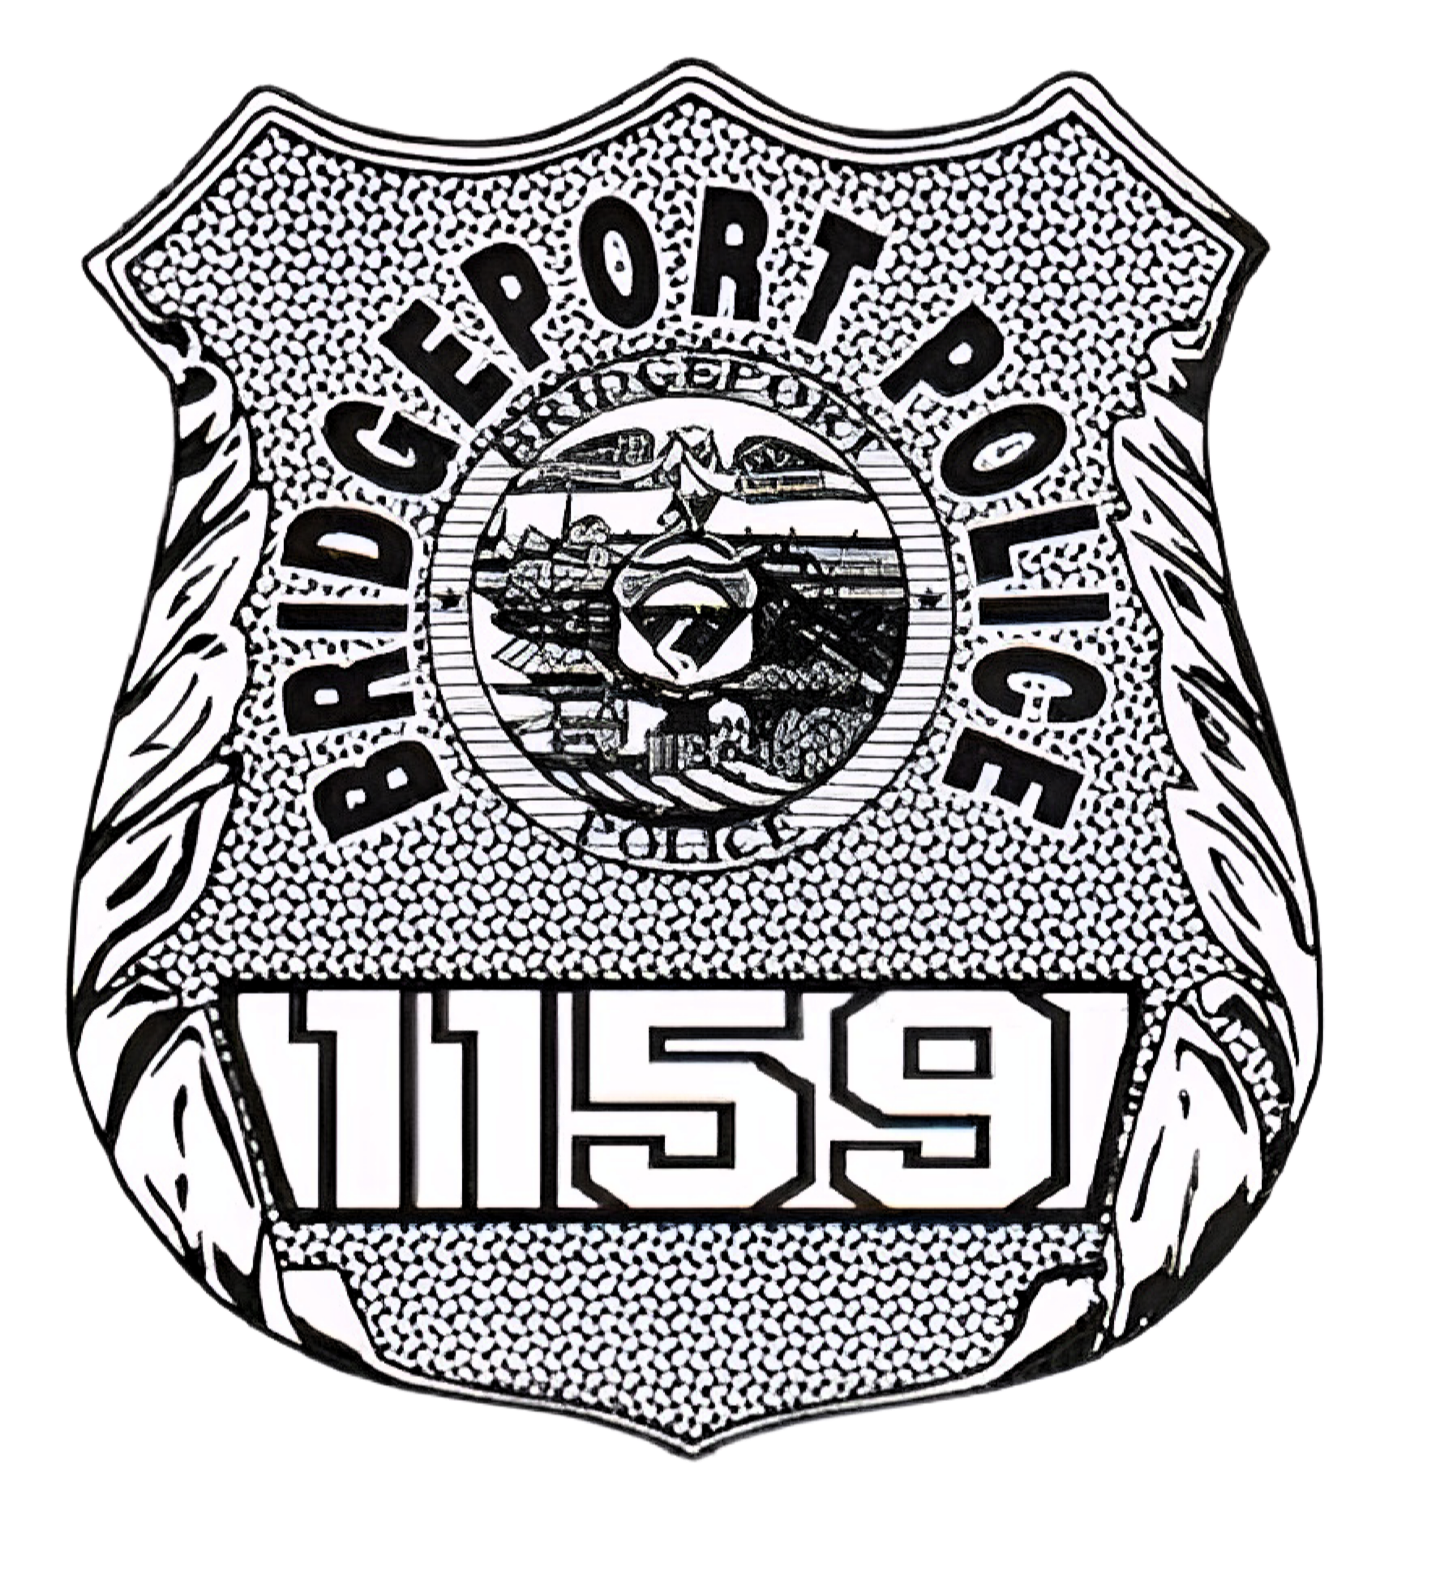 Bridgeport Police Union Local 1159